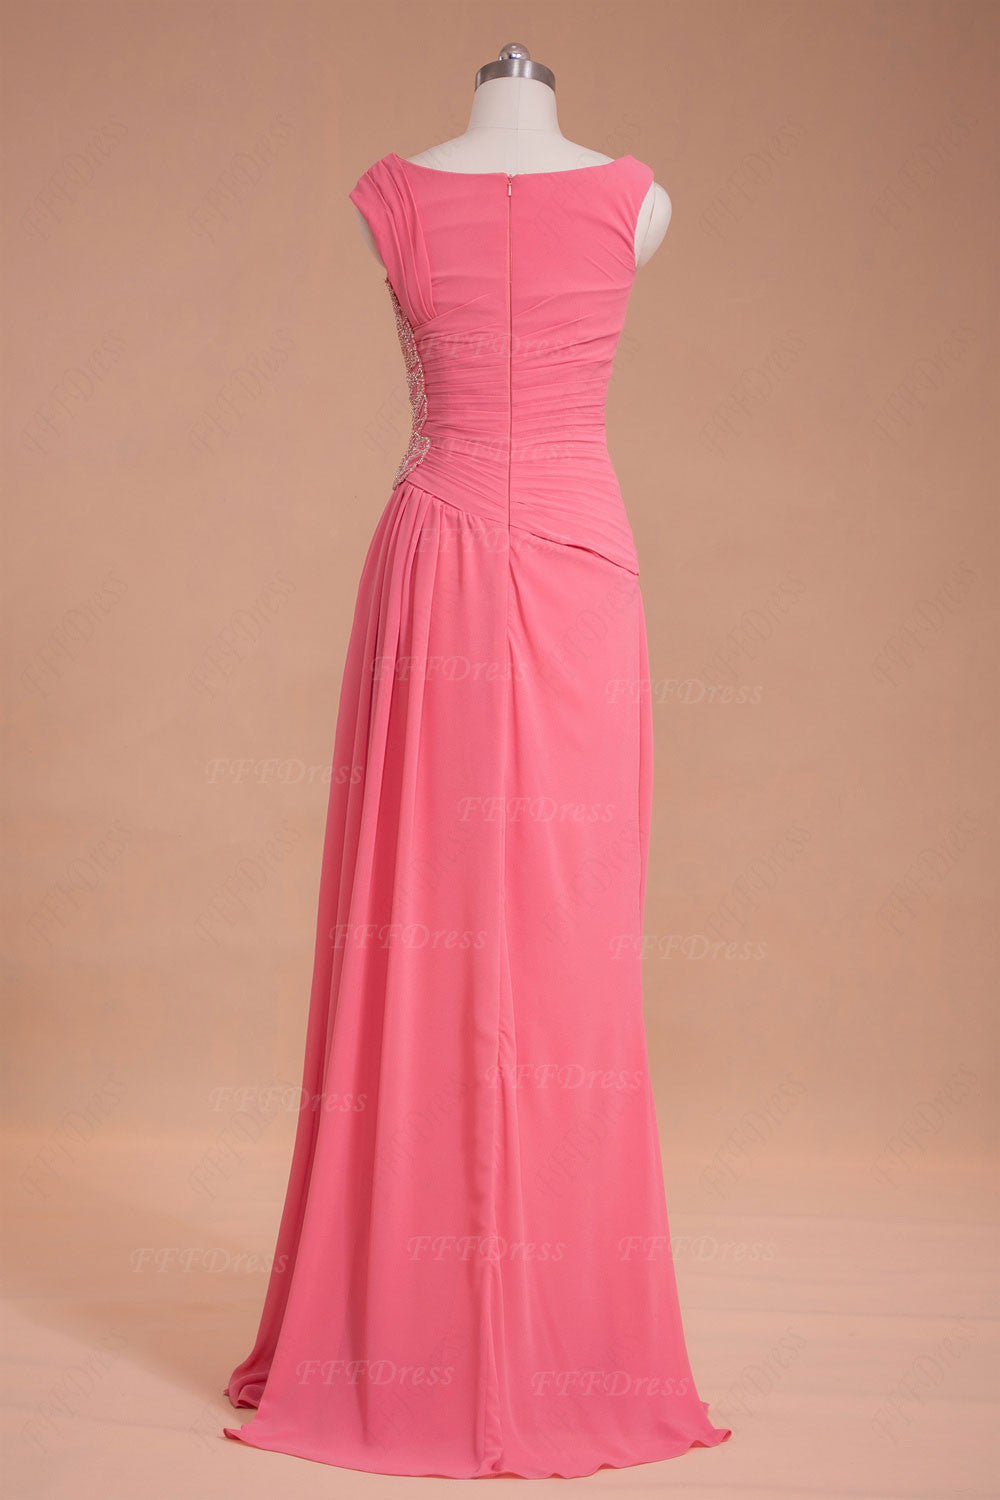 Modest pink Beaded prom dresses long